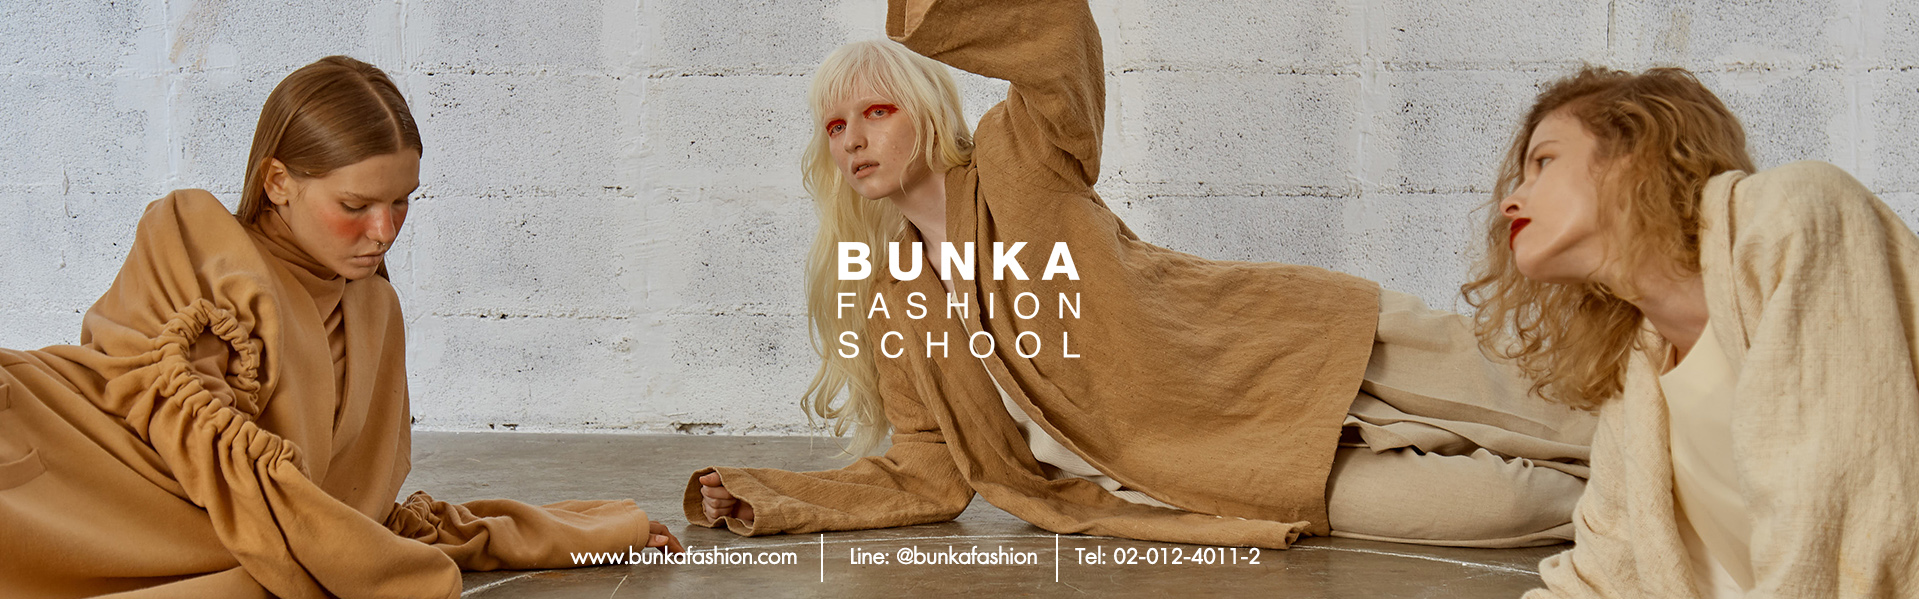 Bunka Fashion College โรงเรียนบุนกะแฟชั่น